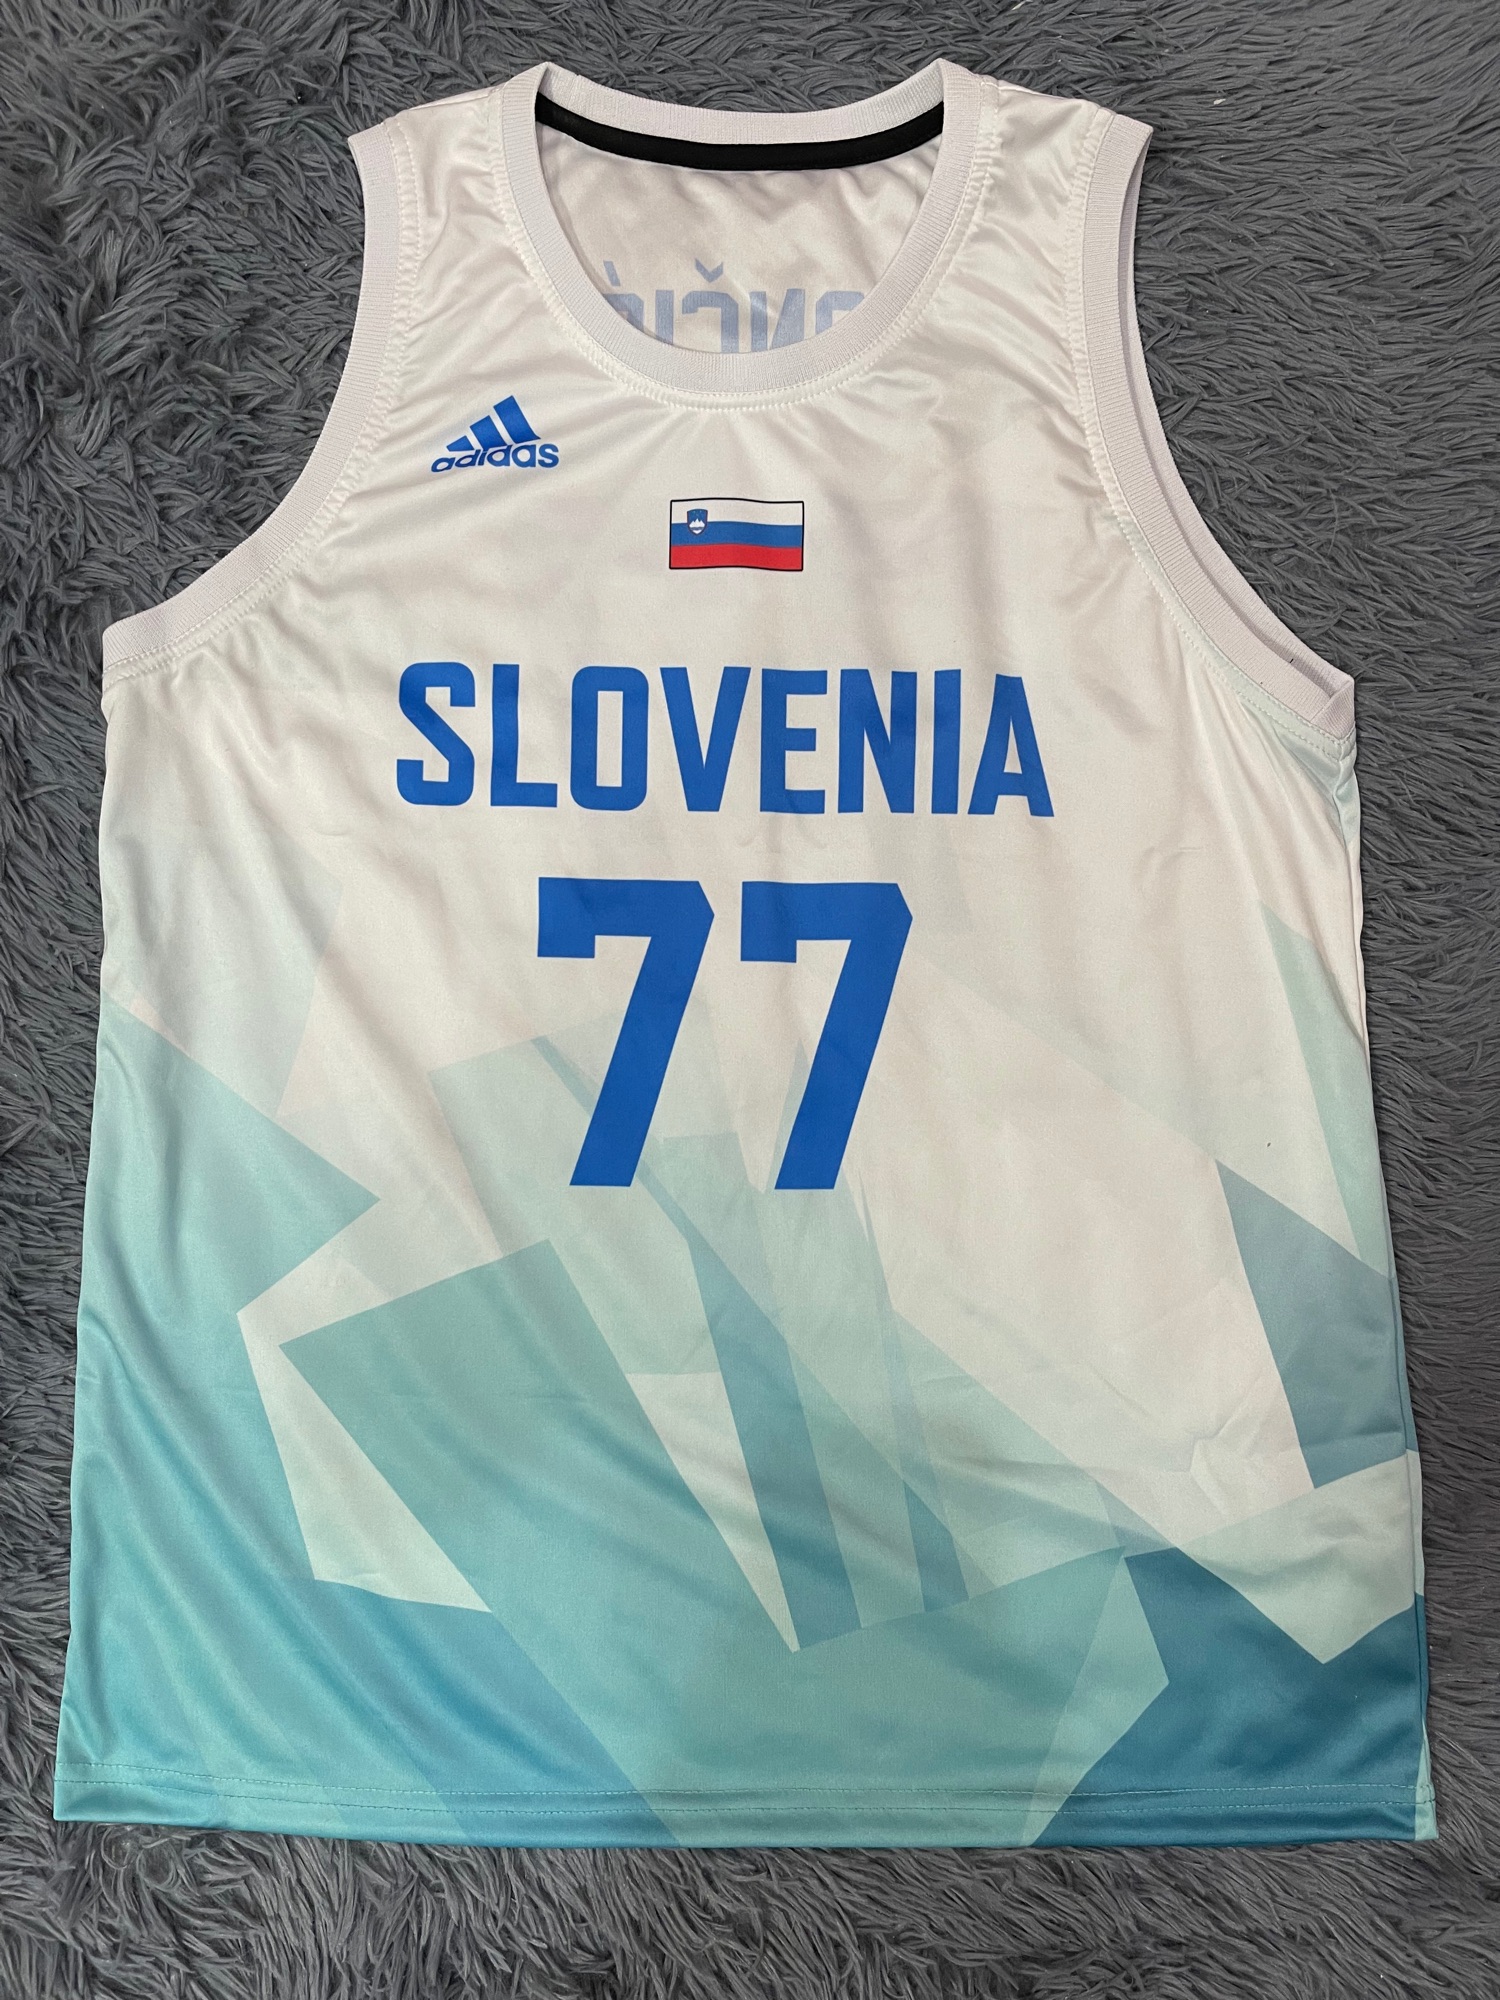 NORTHZONE Slovenia Dark Basketball Jersey Full Sublimated Basketball Jersey,  Jersey For Men (TOP)